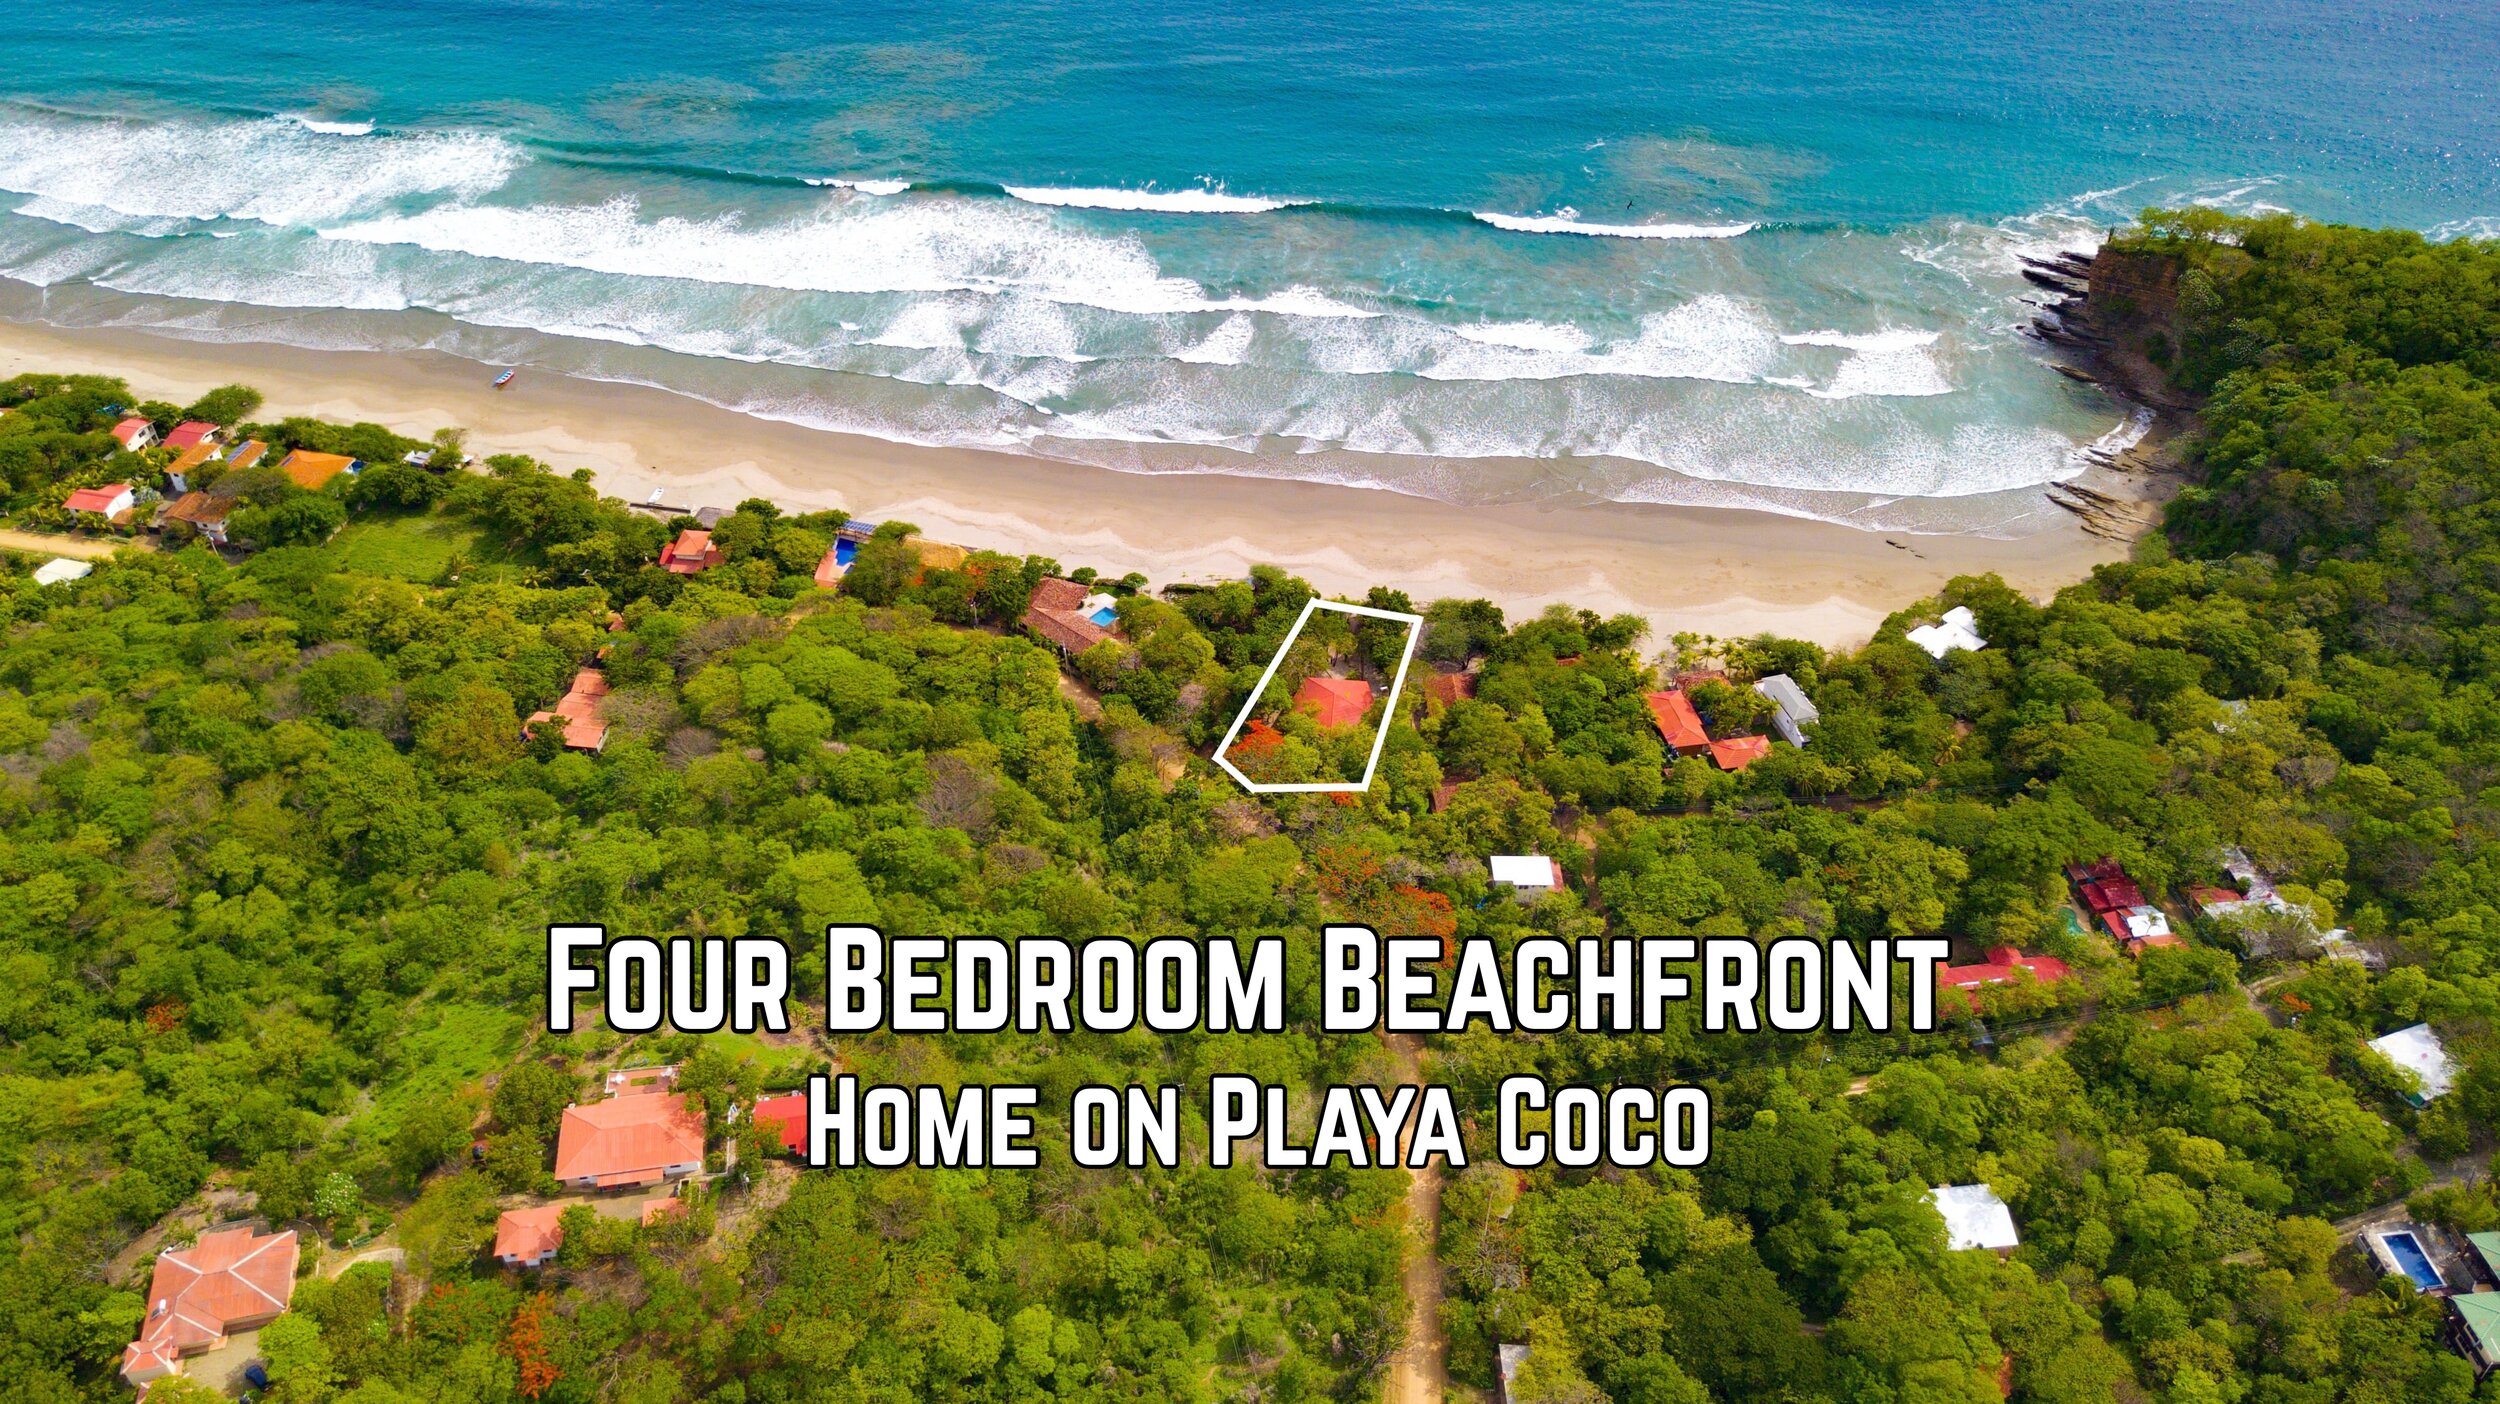 Beachfront Property For Sale Nicaragaua 8 copy.jpg